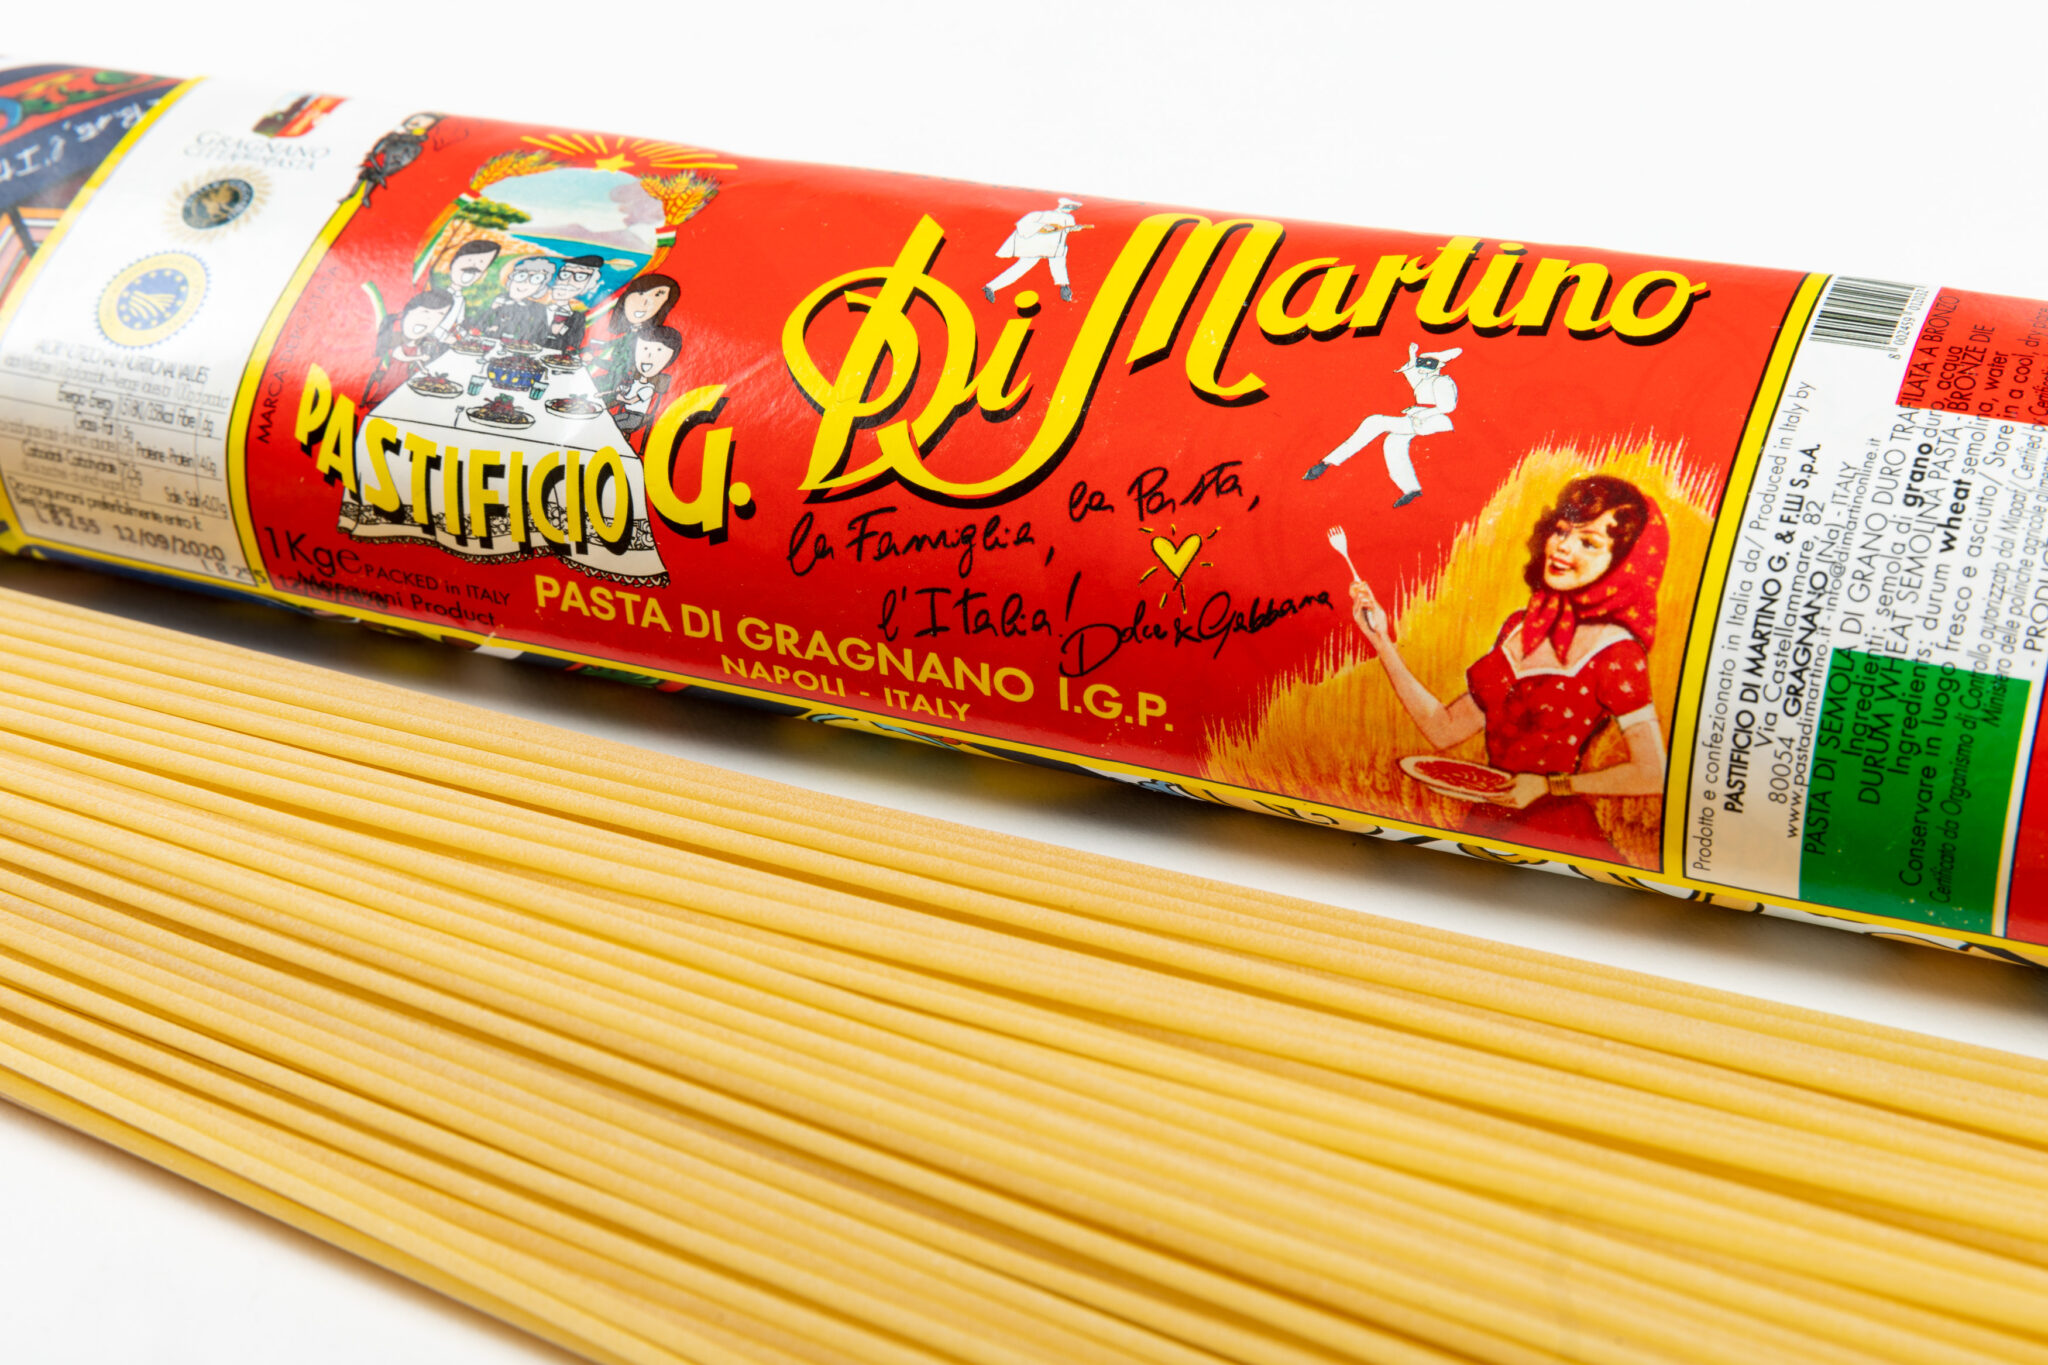 Long hand-wrapped Spaghetti